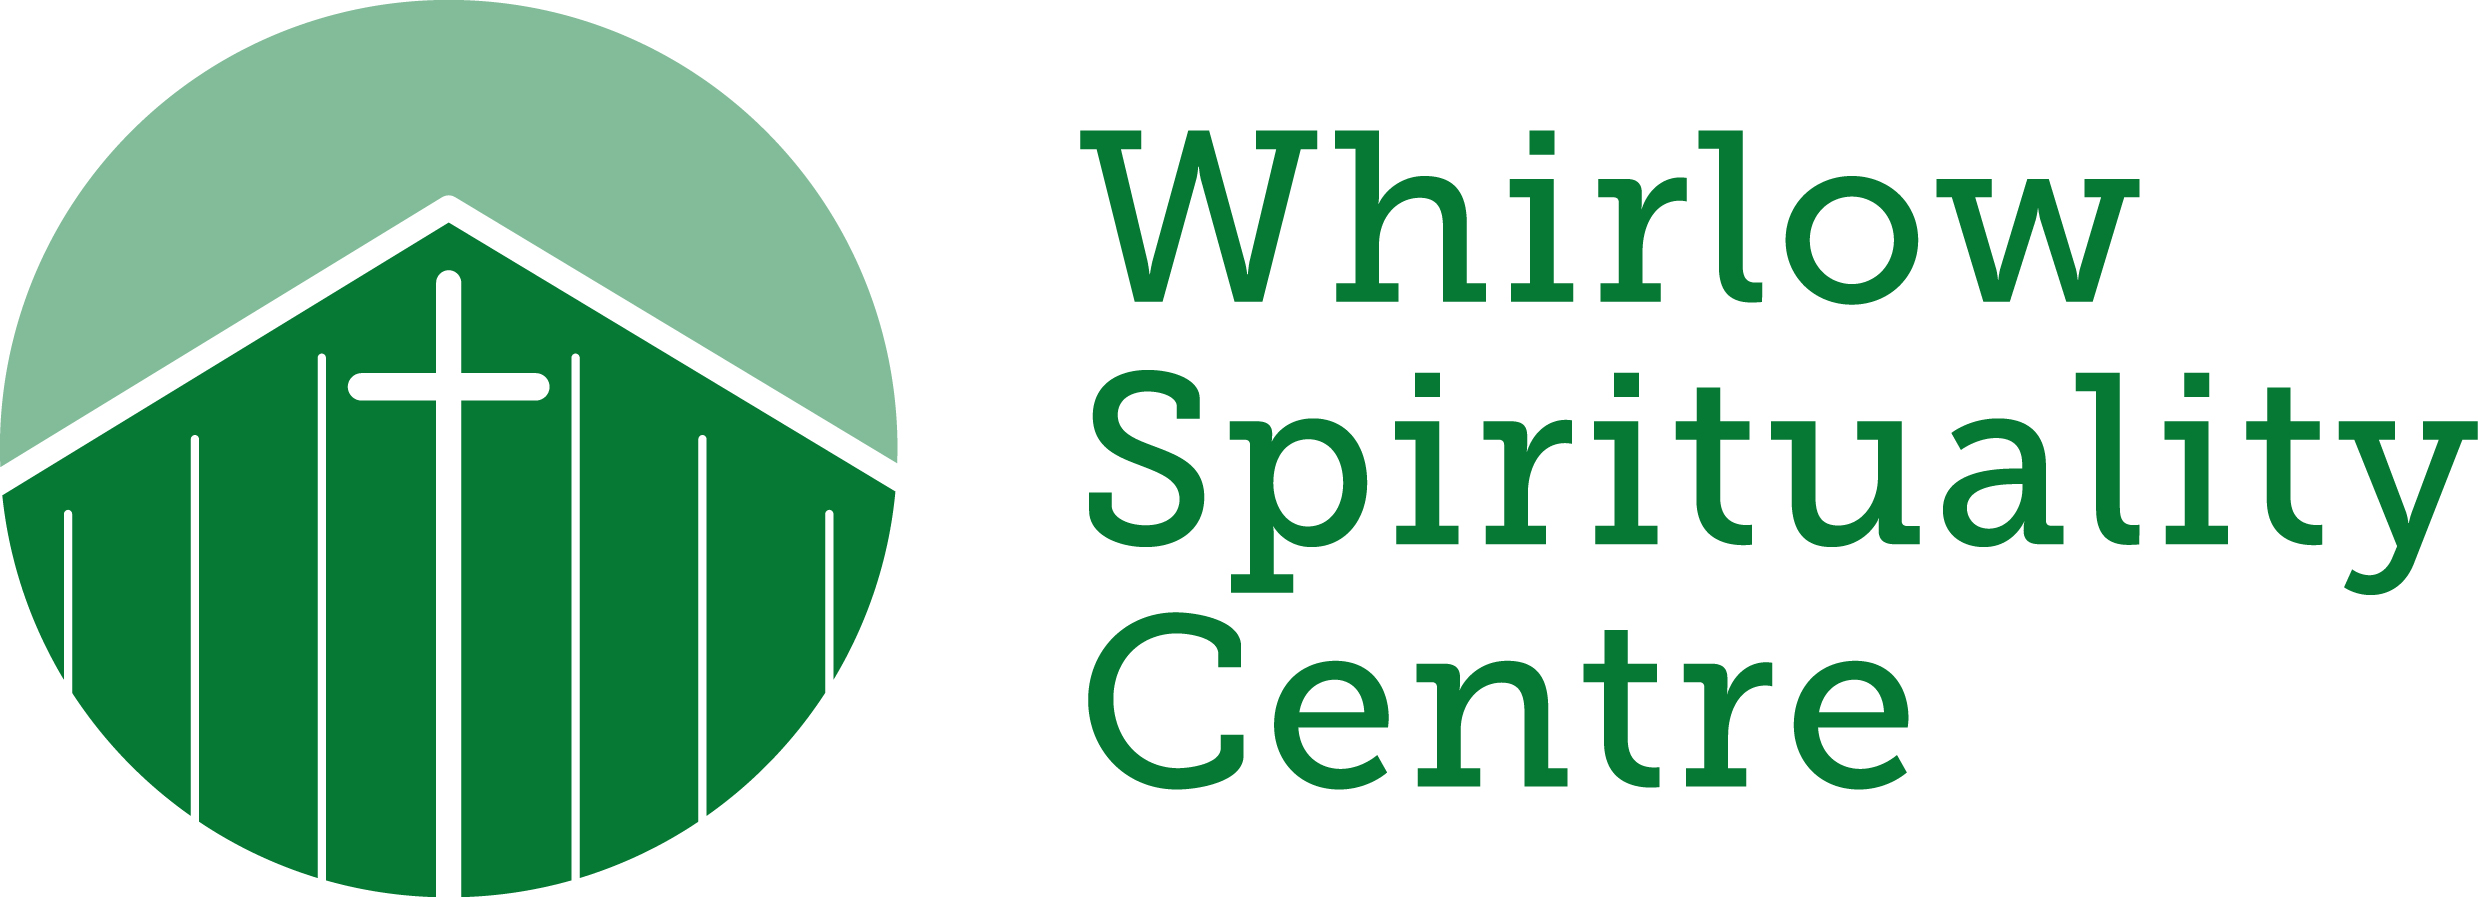 Whirlow Spirituality Centre logo